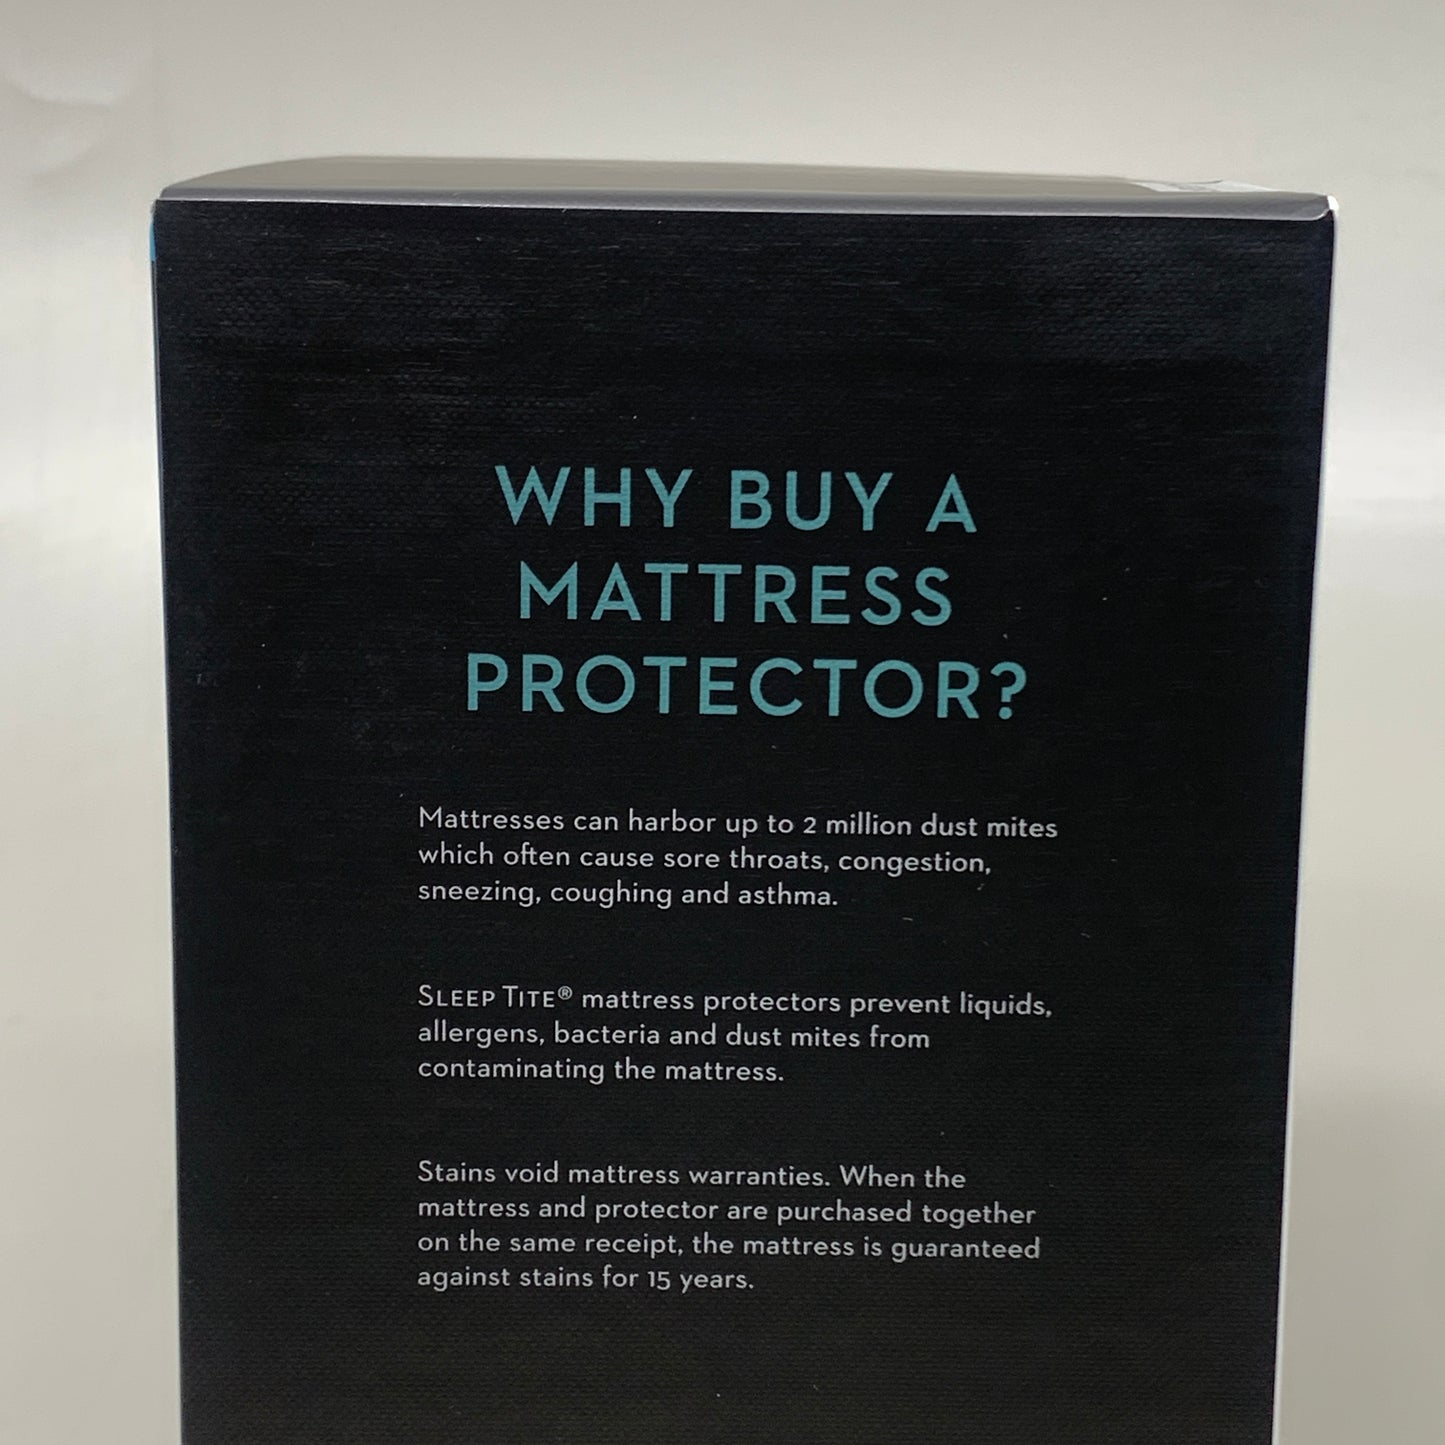 MALOUF Sleep-Tite Five 5ided Smooth Mattress Protector Sz Twin 100% Water-Proof